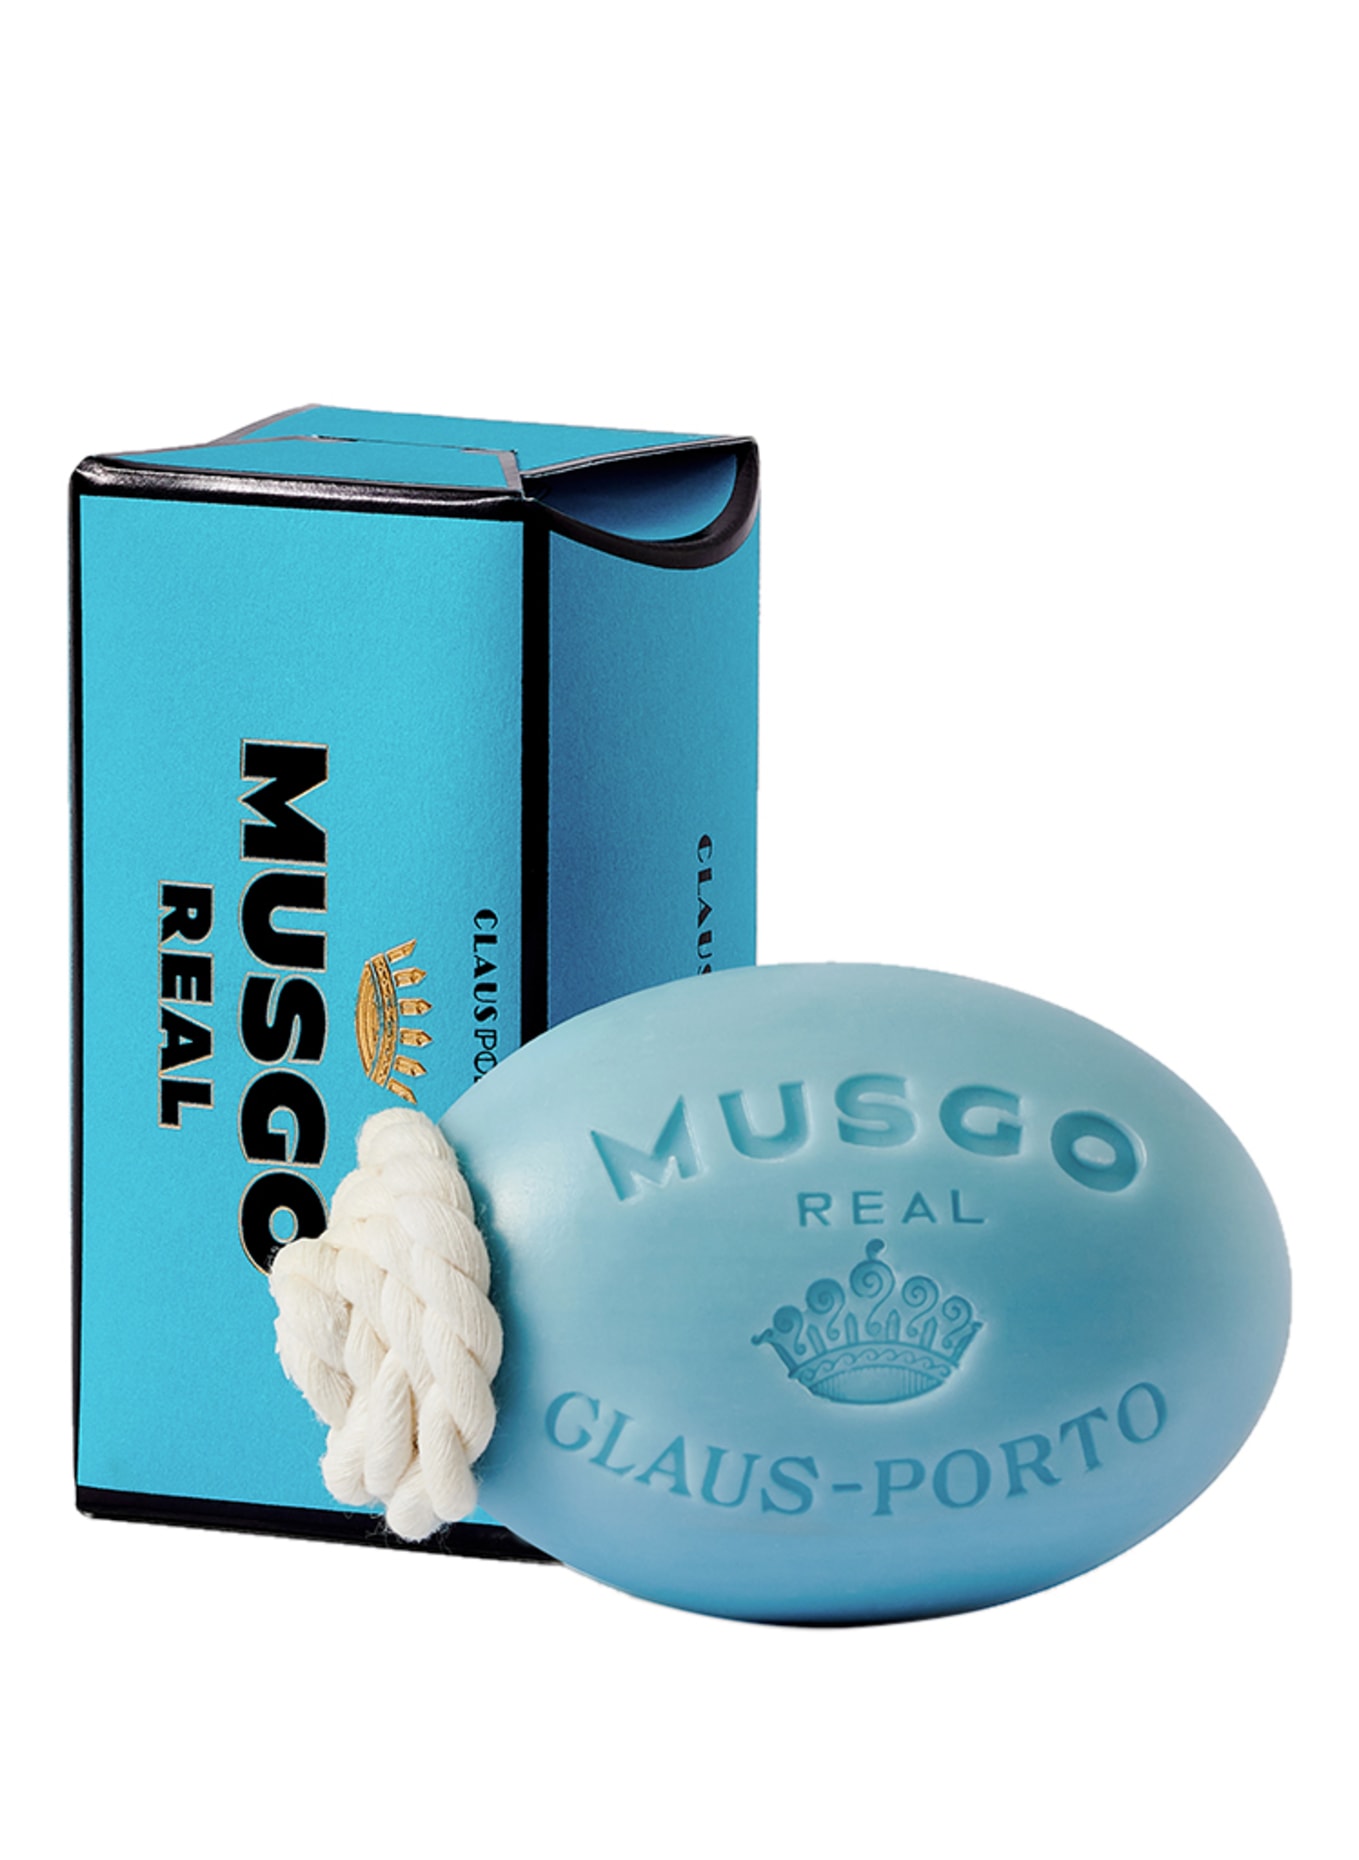 CLAUS PORTO MUSGO REAL ALTO MAR SOAP ON A ROPE (Obrázek 1)